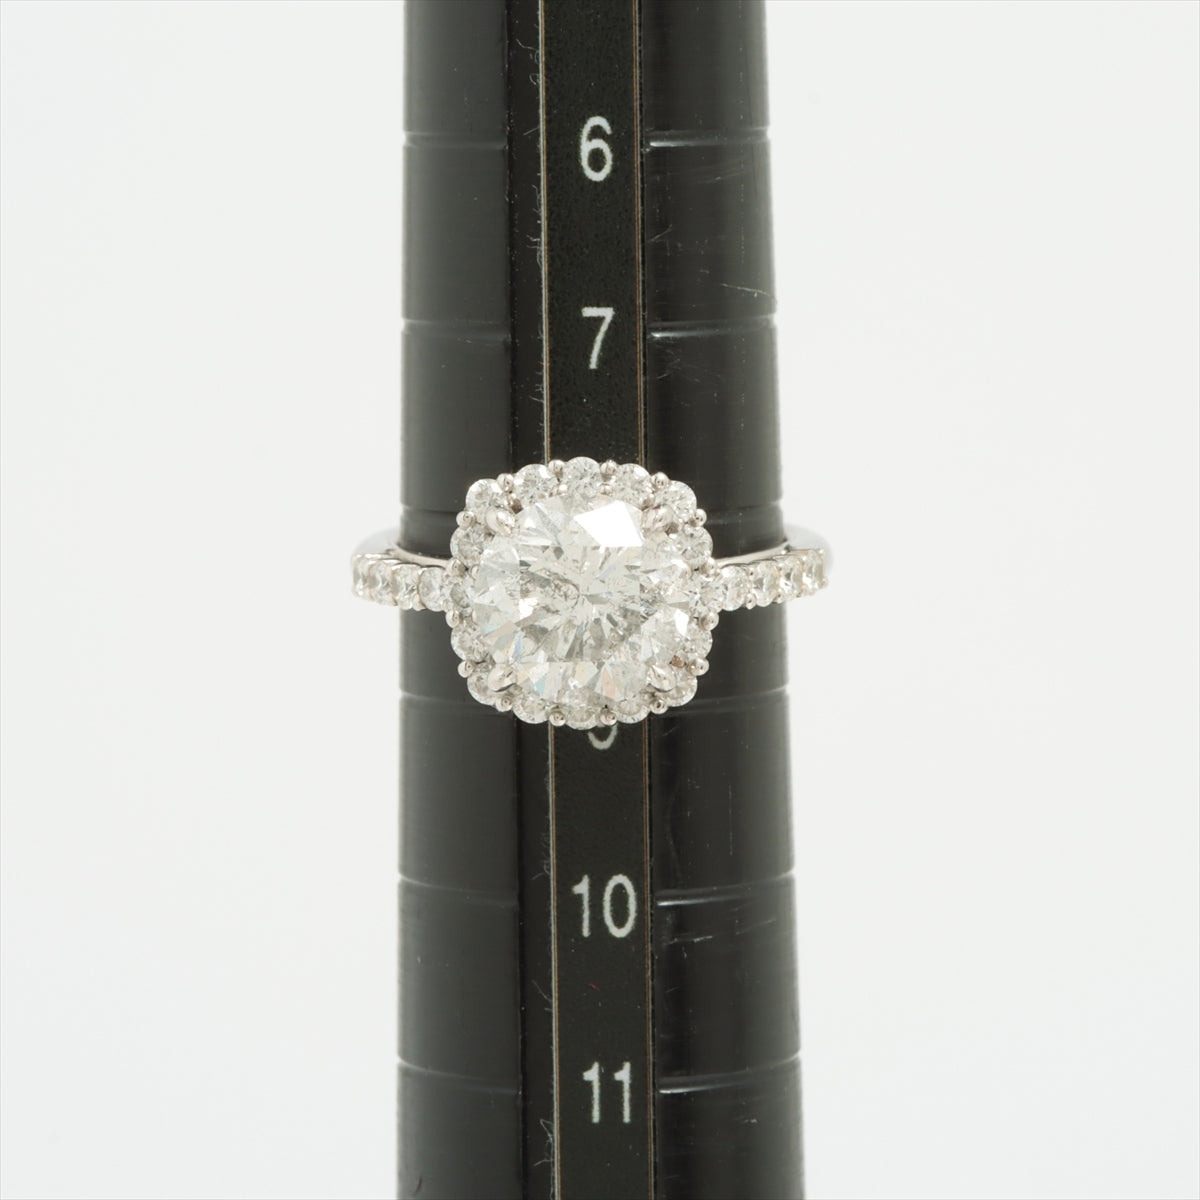 K.UNO Diamond Ring Pt900 5.7g 2.23 0.48 Initial Main stone cracked